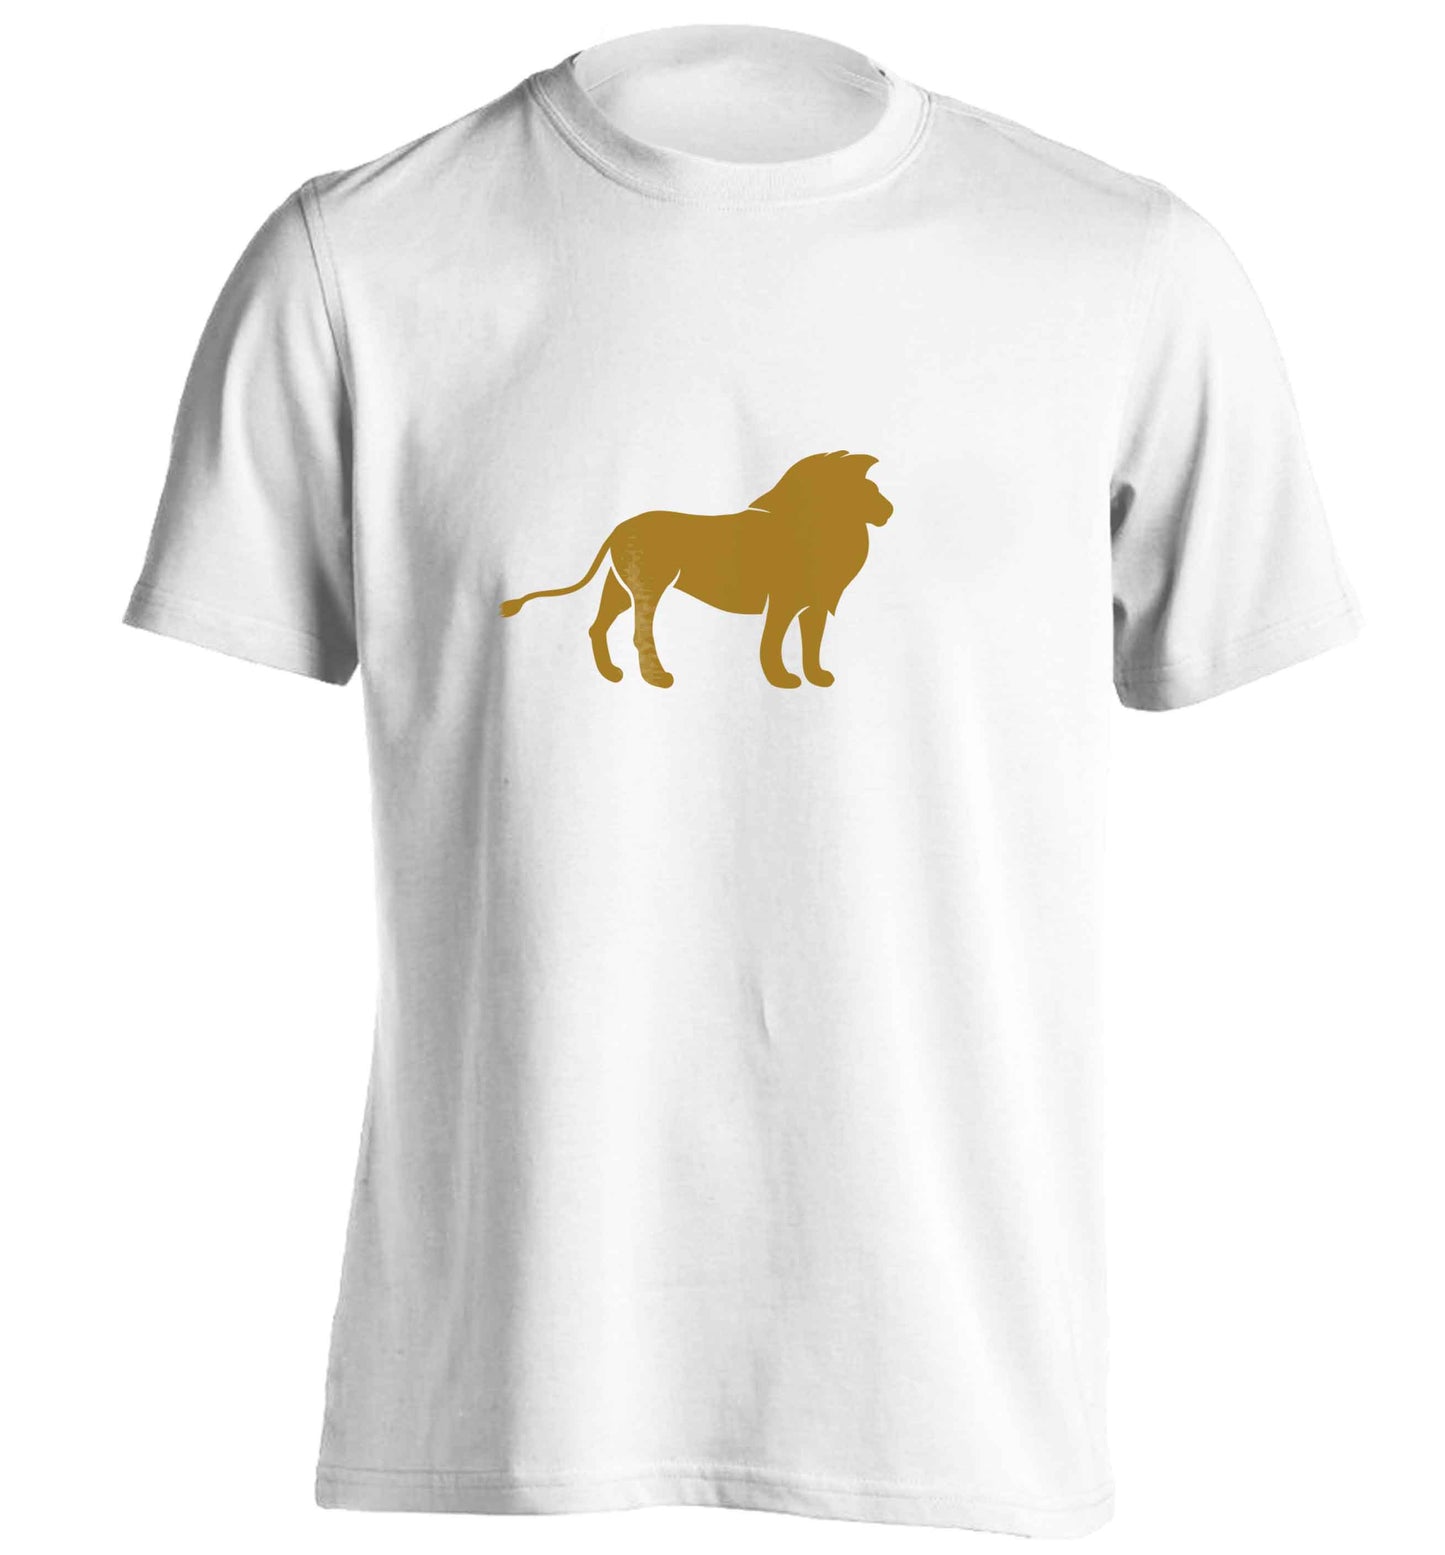 Gold lion adults unisex white Tshirt 2XL